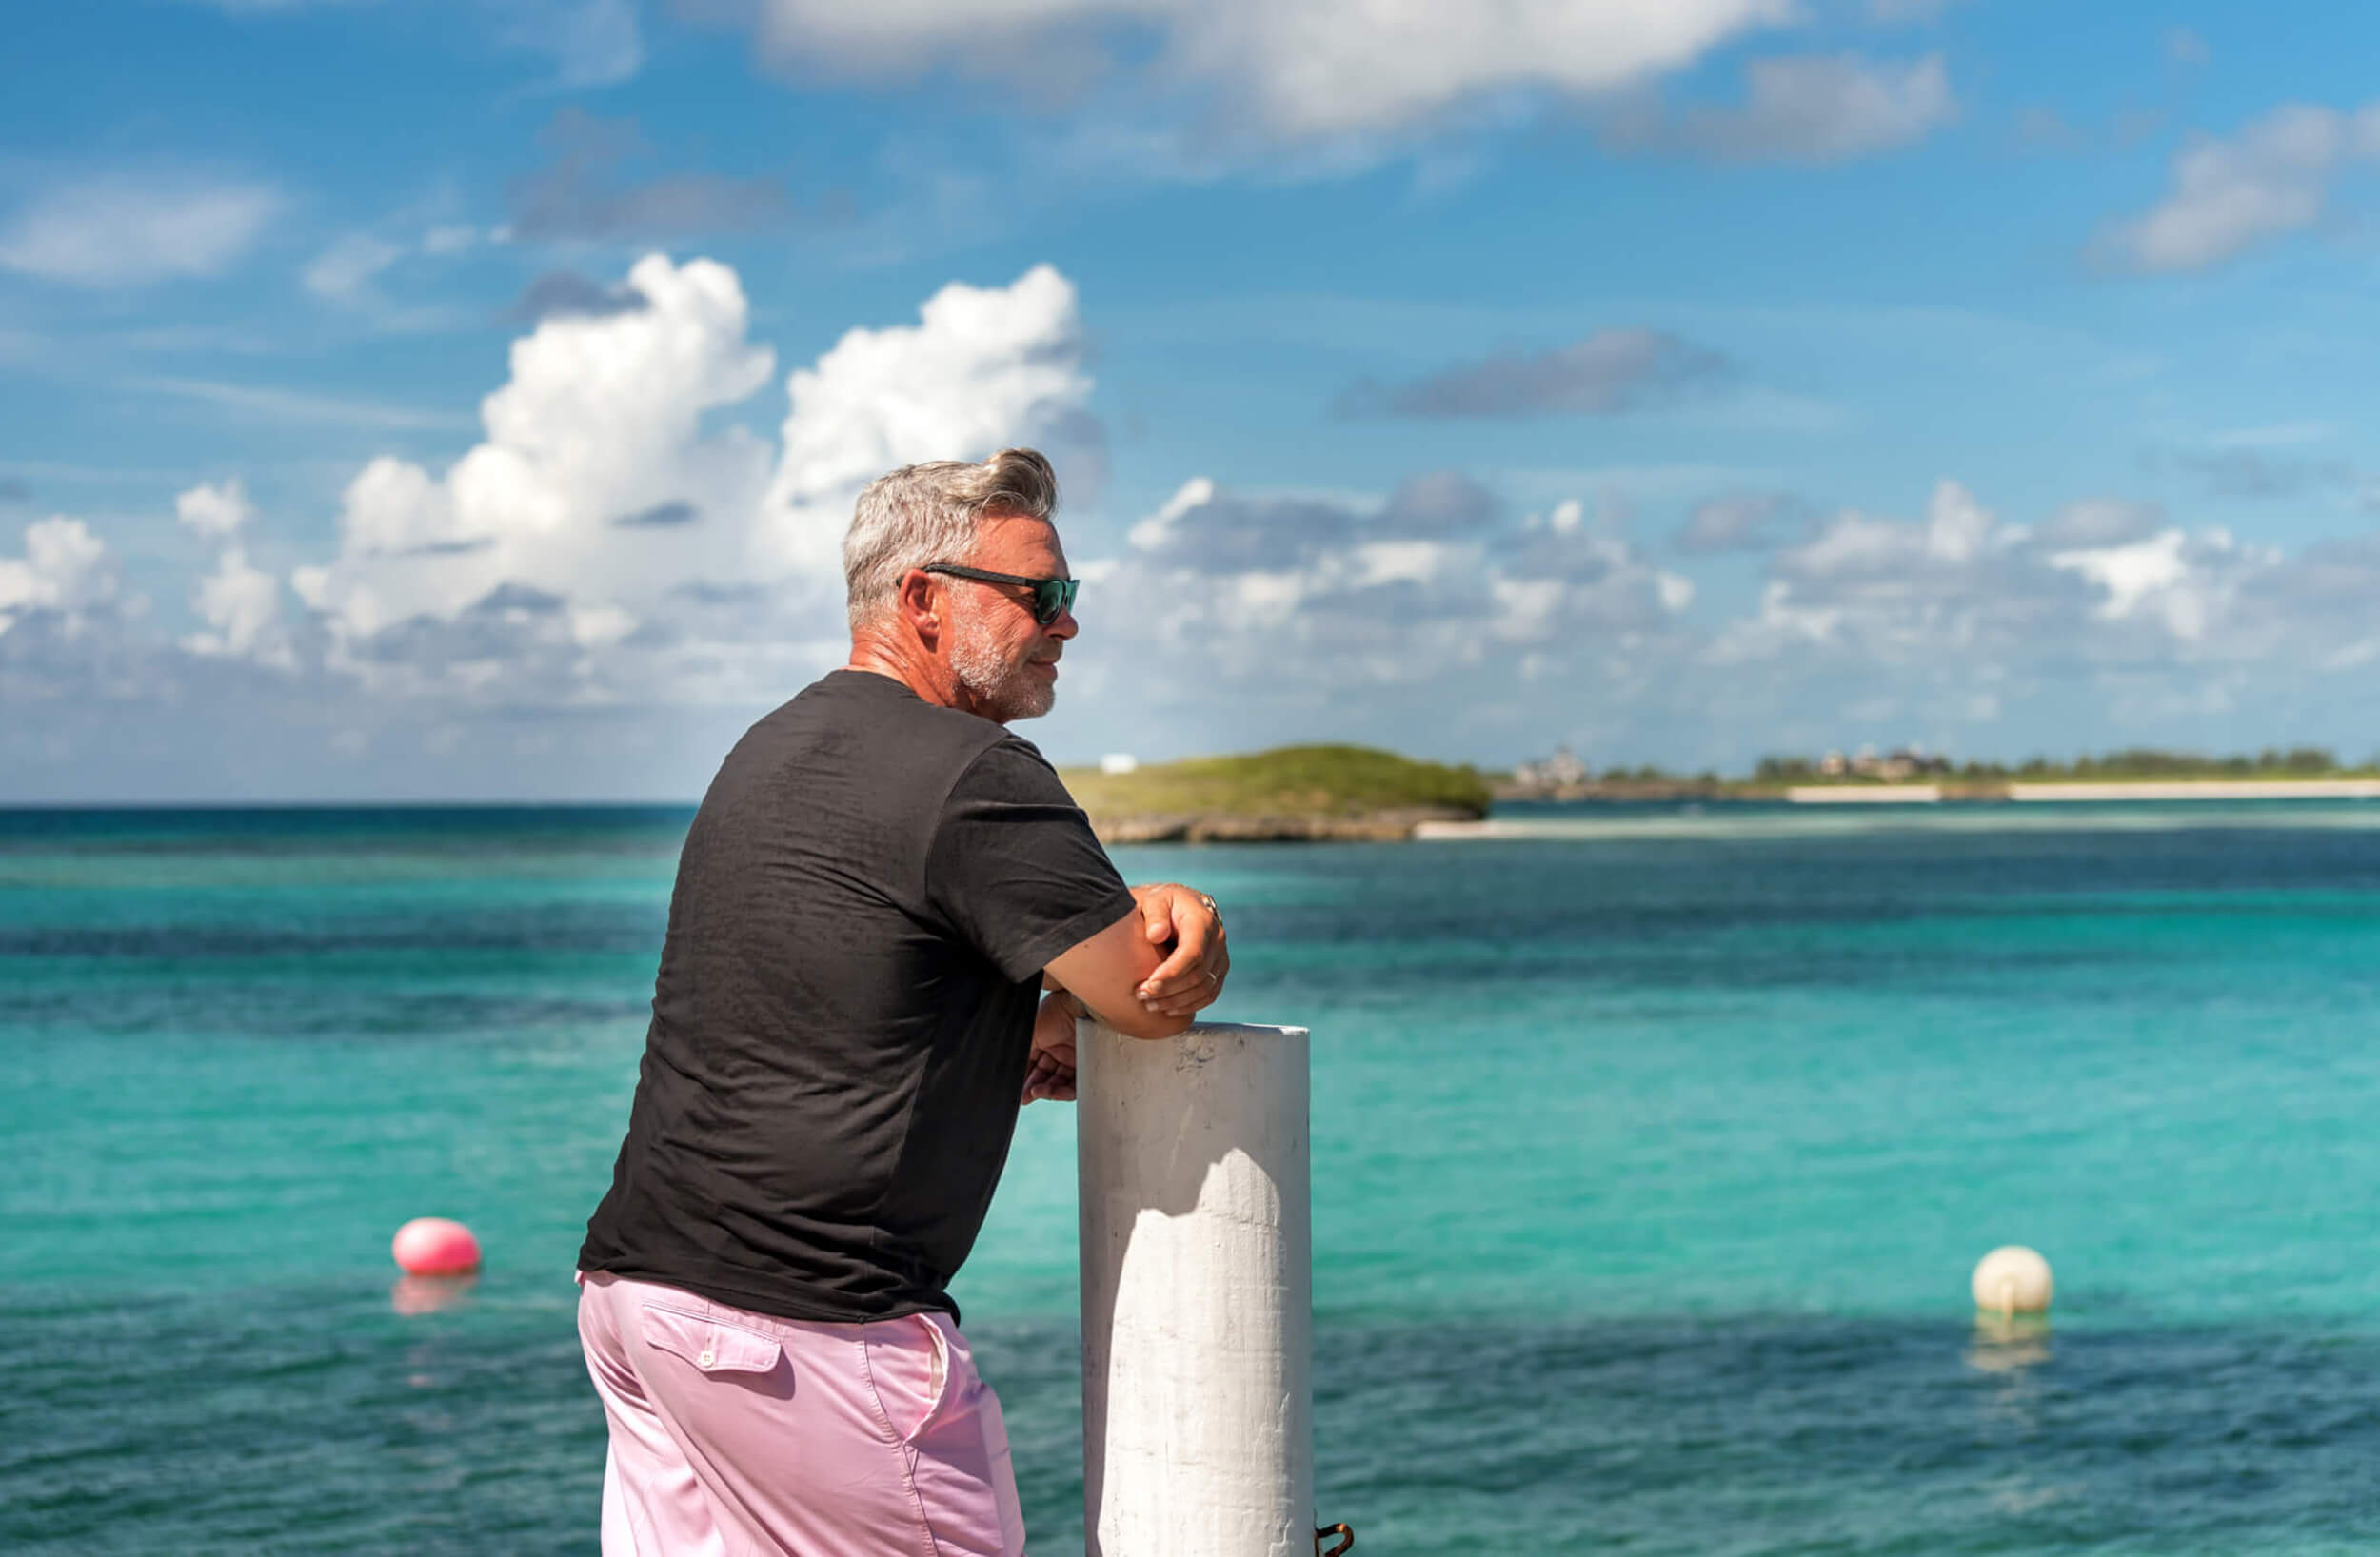 Golfer Abaco Club ambassador Darren Clarke looking at the Bahamian sea